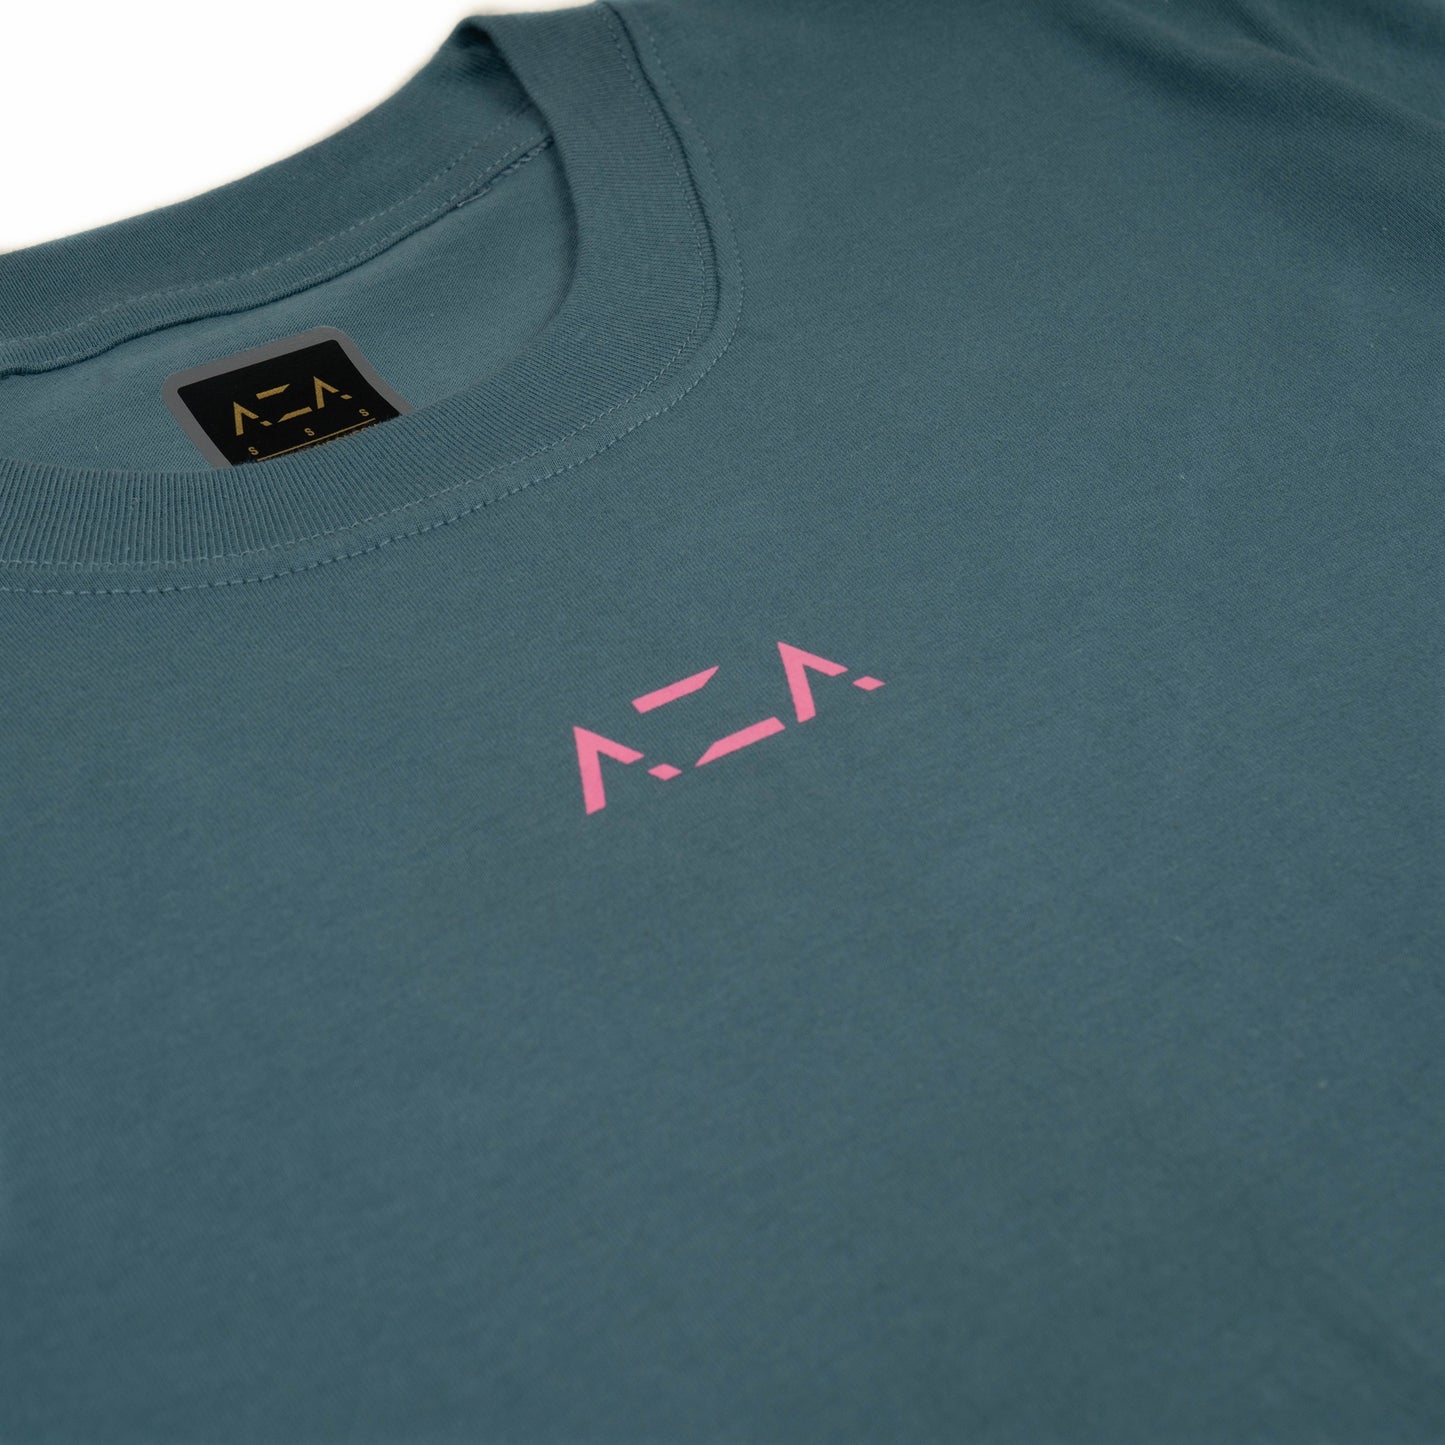 AZA T-Shirt Pro Basic Edition (Vol.2) - Mineral Blue / Pink